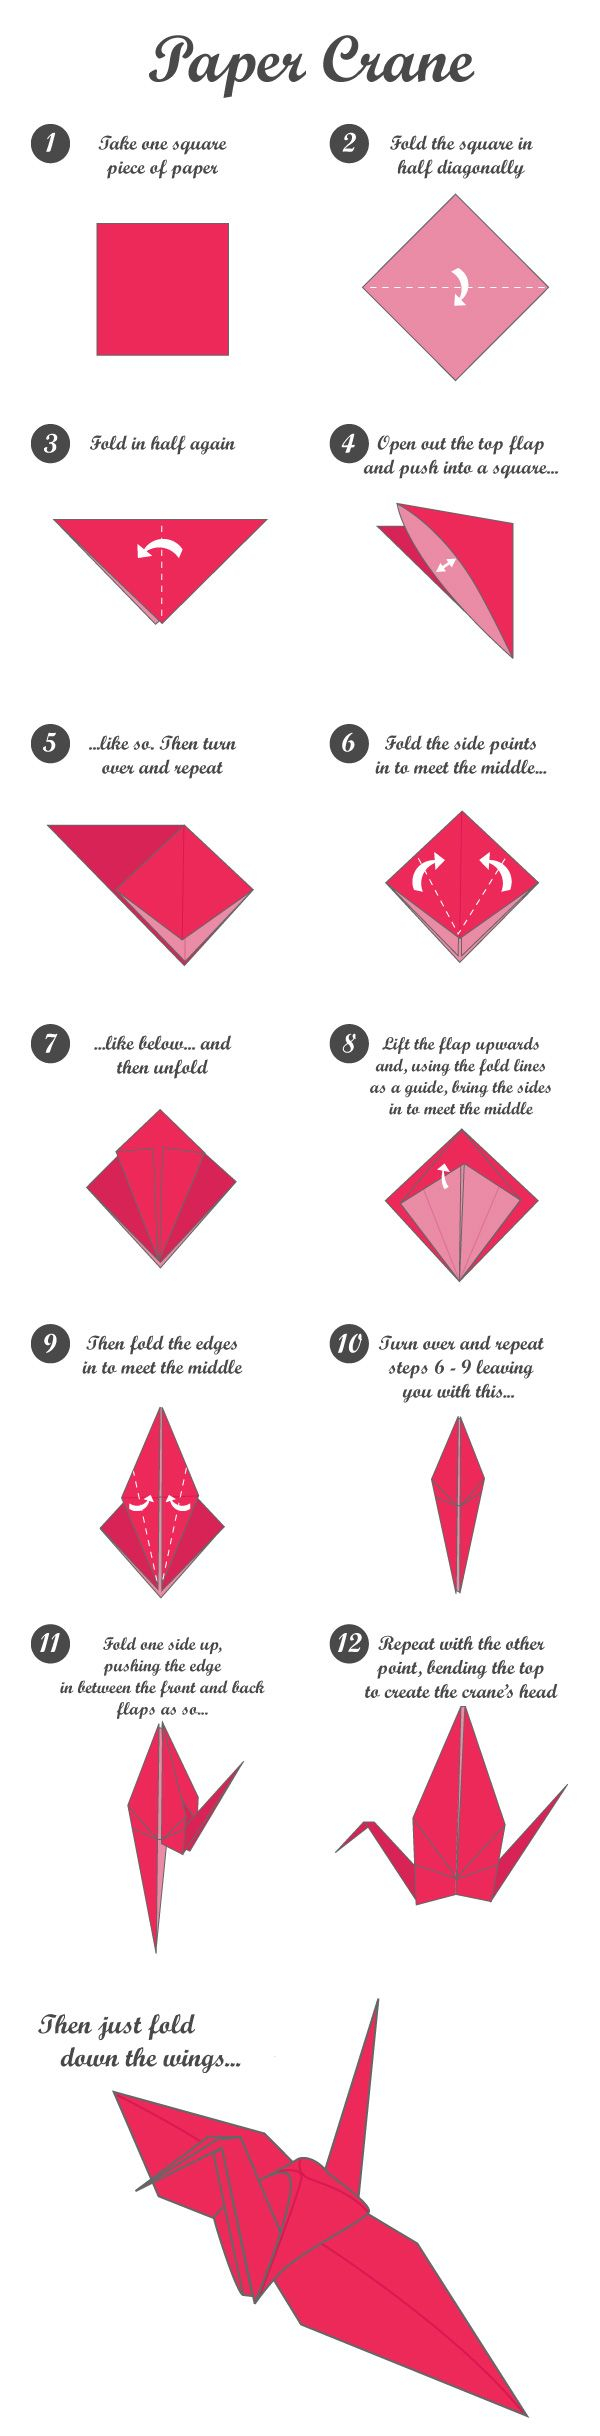 How To Make A Crane Origami How To Make An Origami Crane That Flaps Its Wings Origami Crane